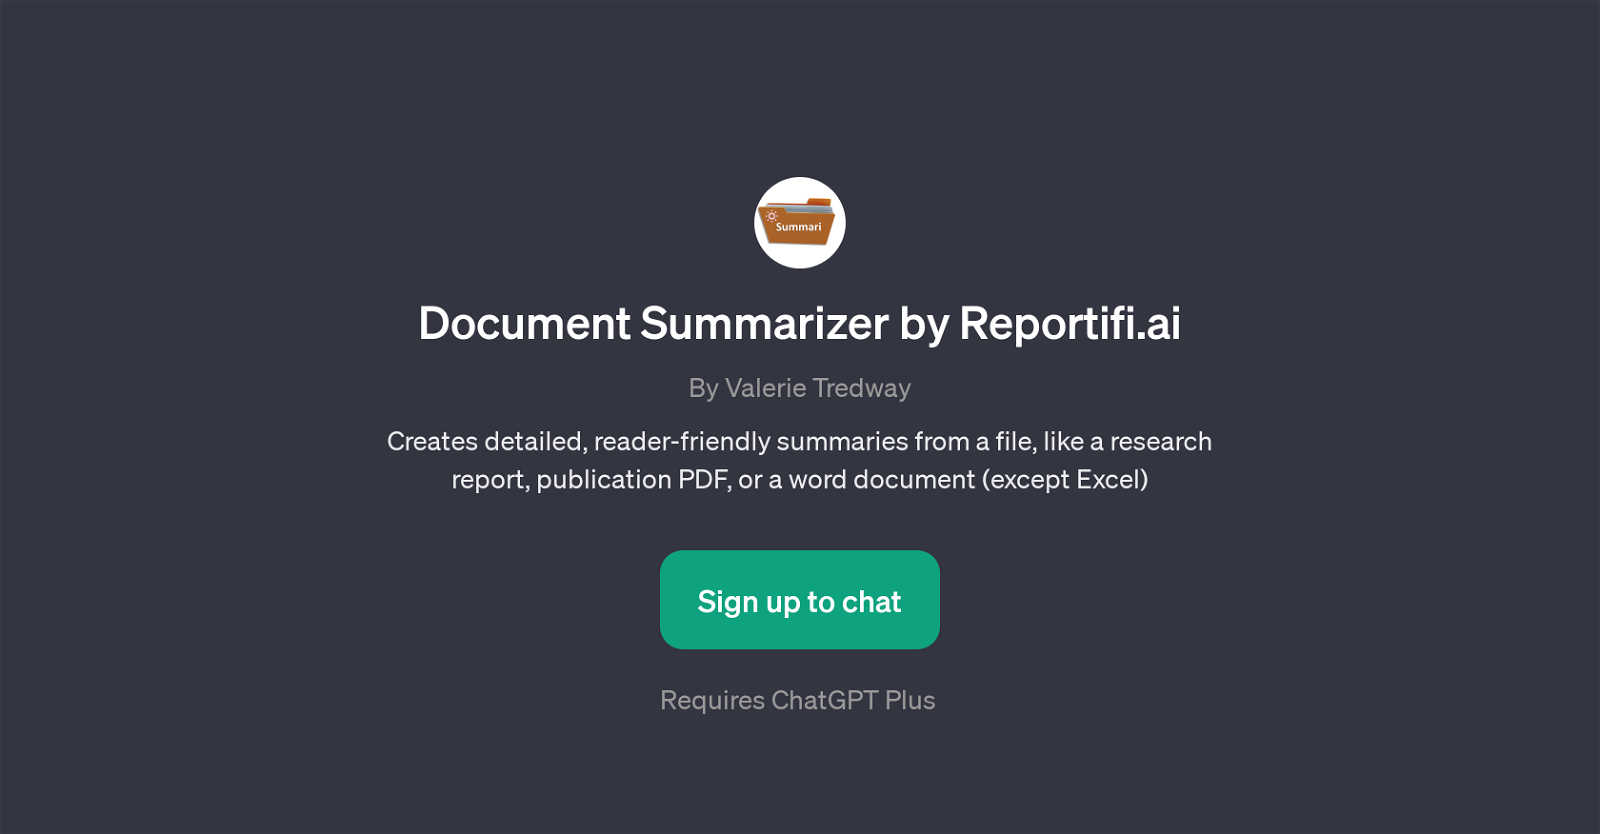 Document Summarizer by Reportifi.ai website